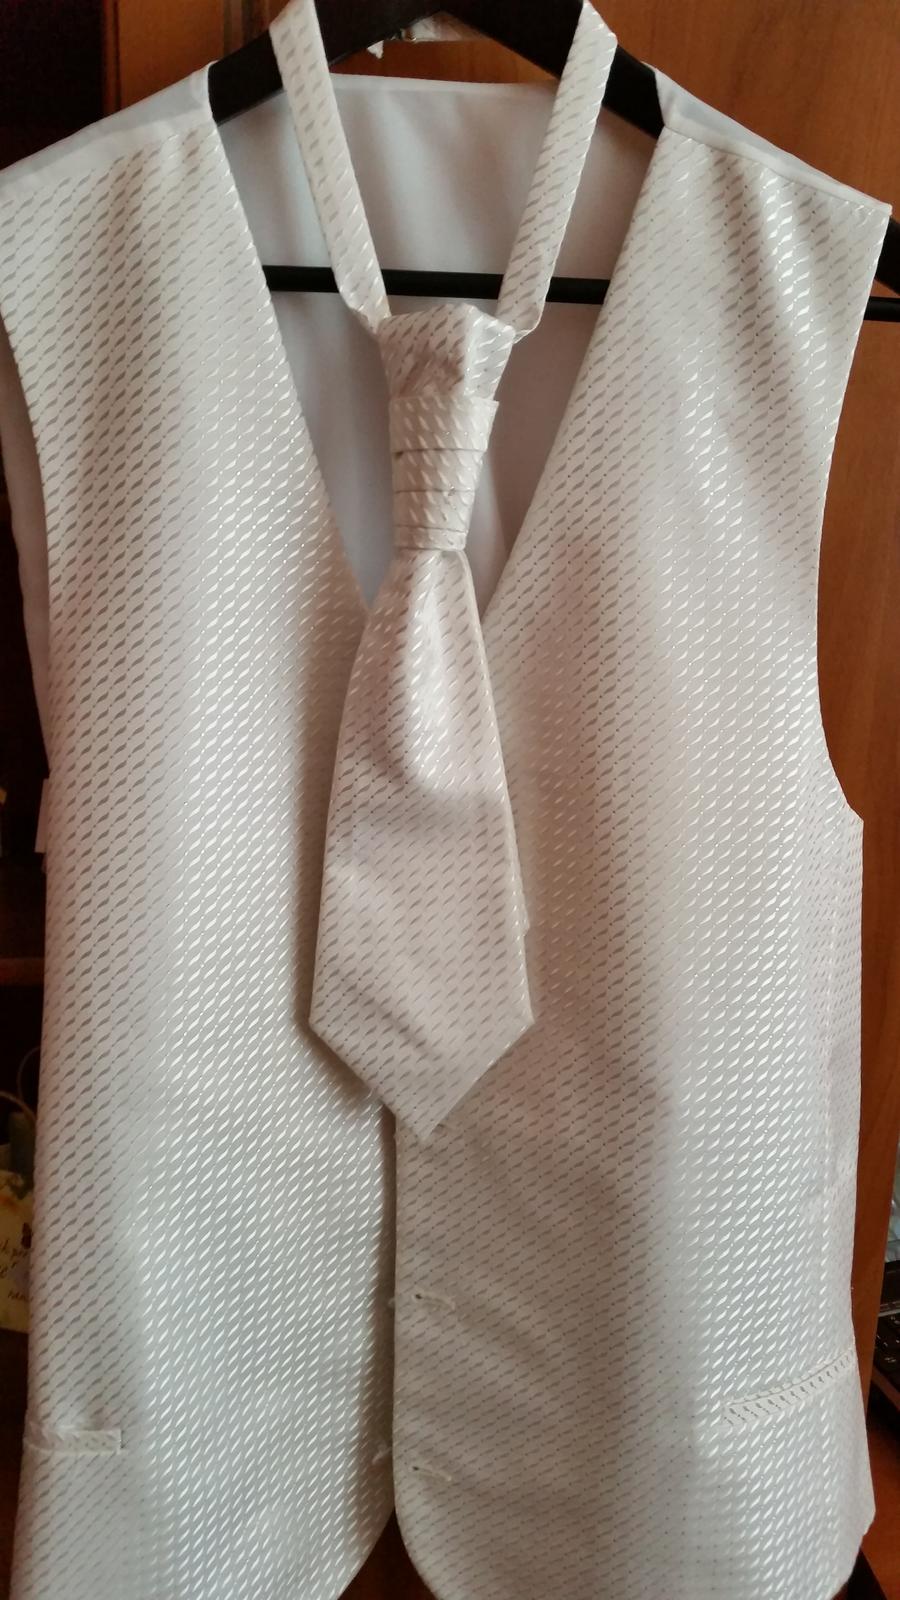 Svadobna vesta +kravata+vreckovka pre zenicha - Obrázok č. 1